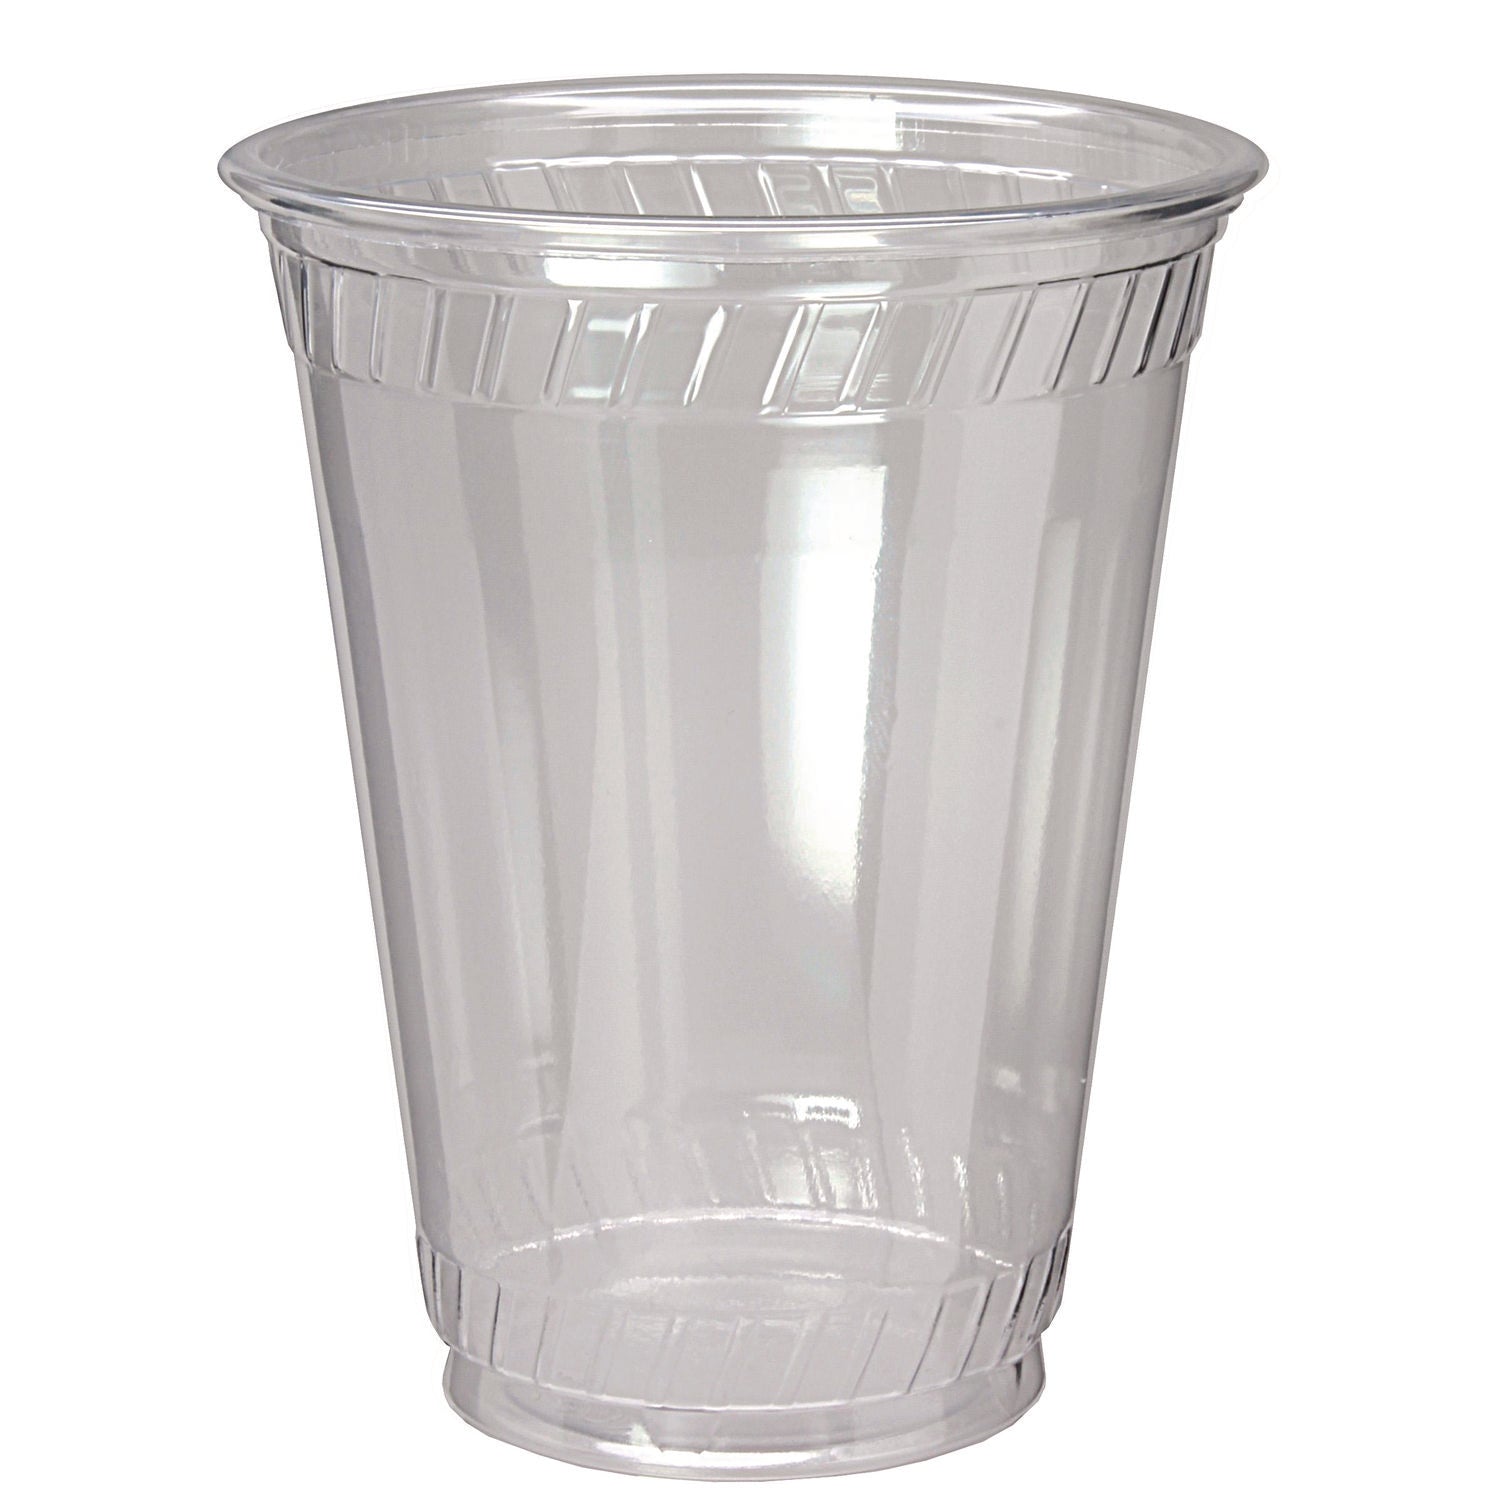 Kal-Clear True PET Cold Drink Cups, 9 oz, Clear, 50/Bag, 20 Bags/Carton - 1